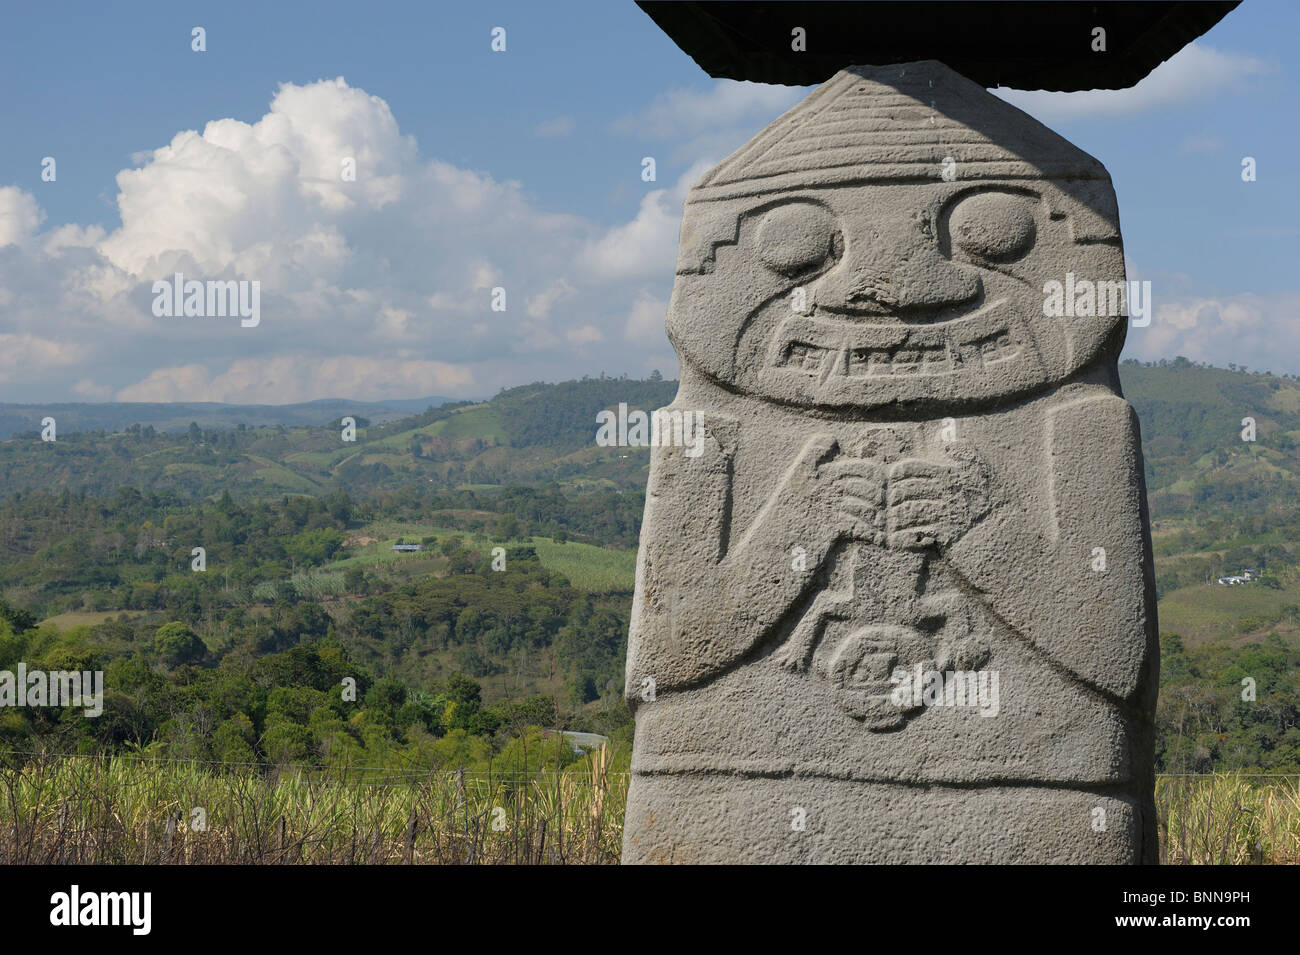 Landscape San Agustin Department Huila Colombia South America stone figure Stock Photo